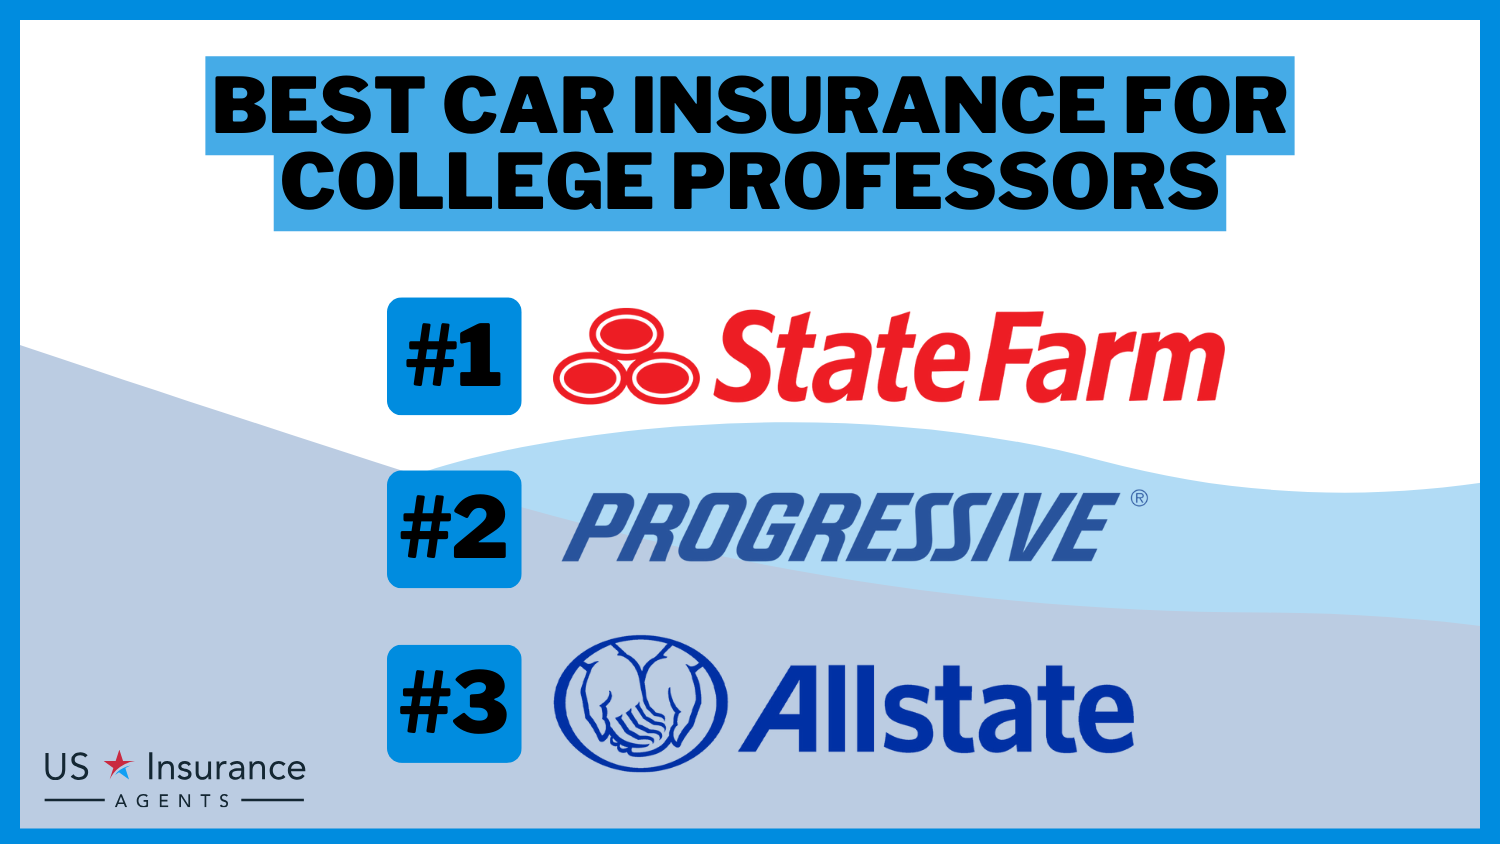 3 Best Car Insurance for College Professors: State Farm, Progressive, and Allstate.